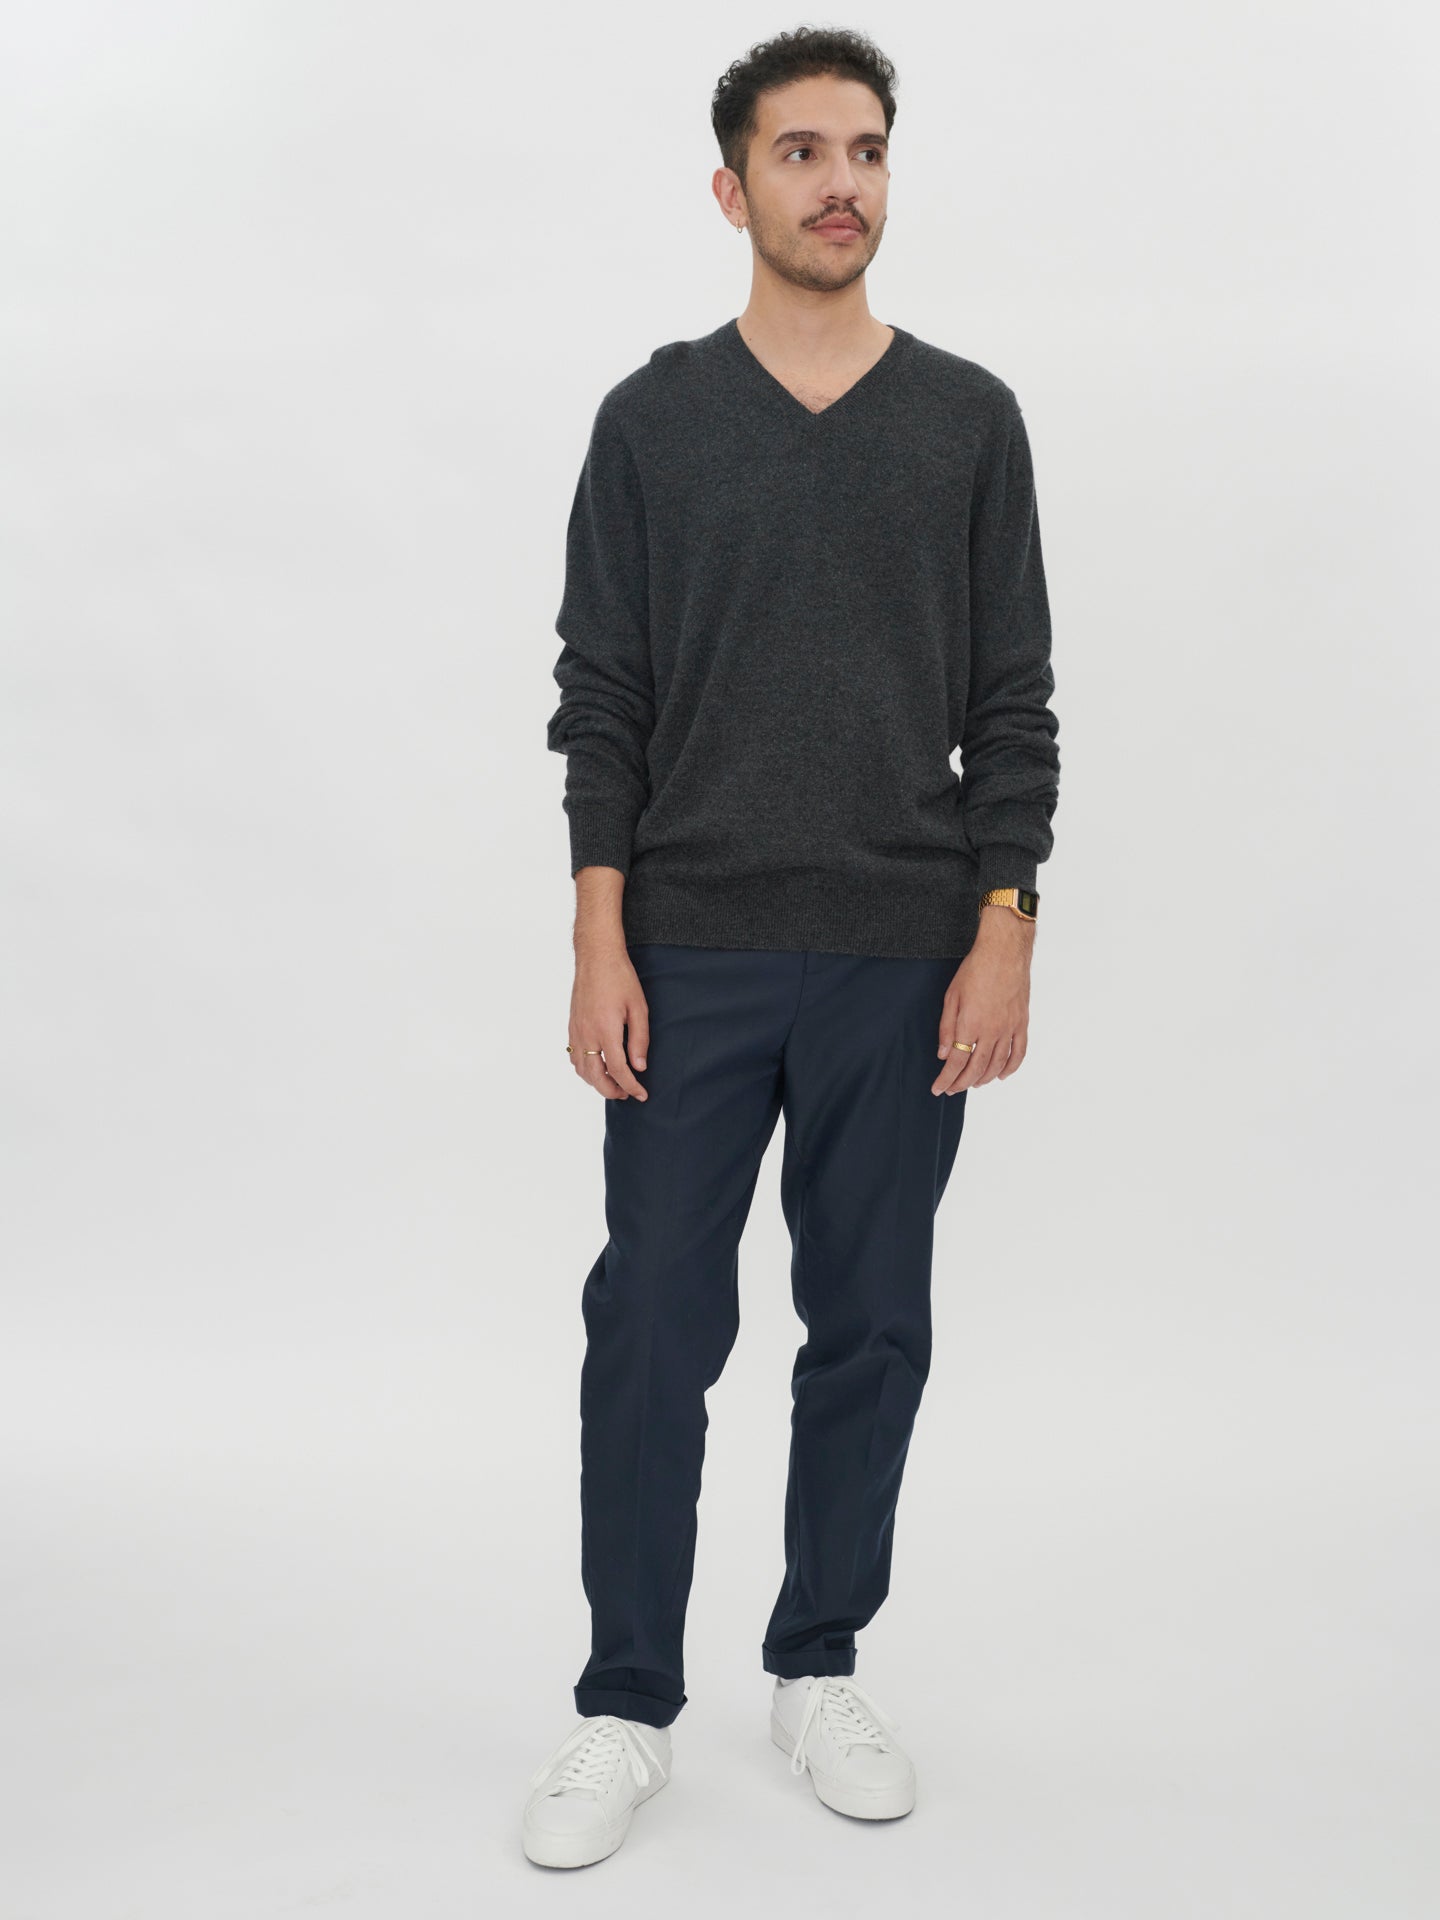 Men's Cashmere V-Neck Sweater Charcoal - Gobi Cashmere